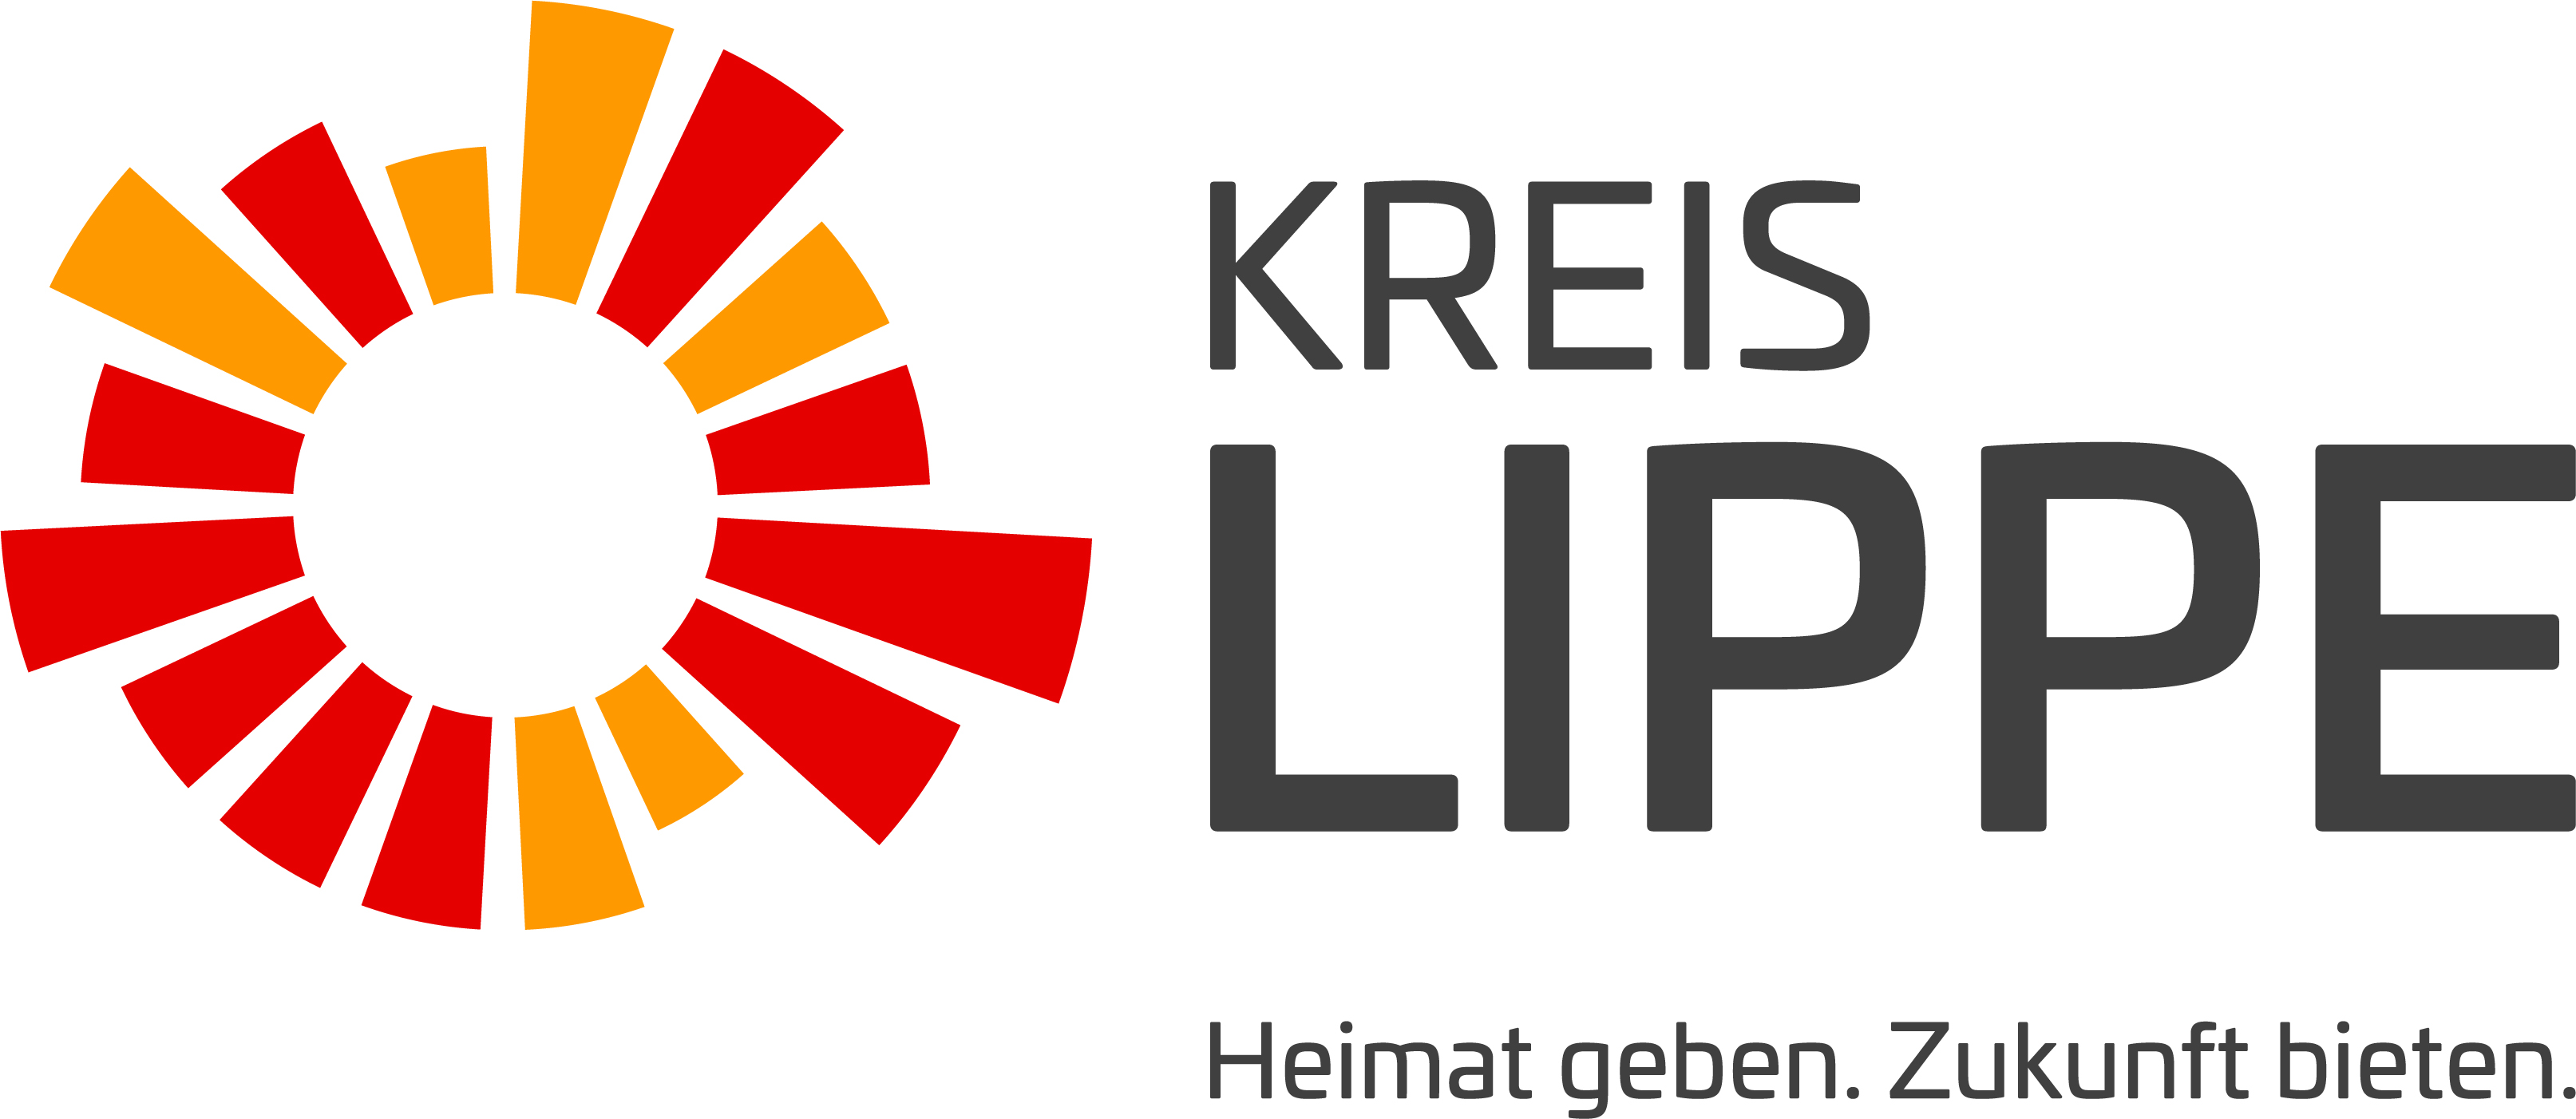 Logo Kreis Lippe farbig claim 4c